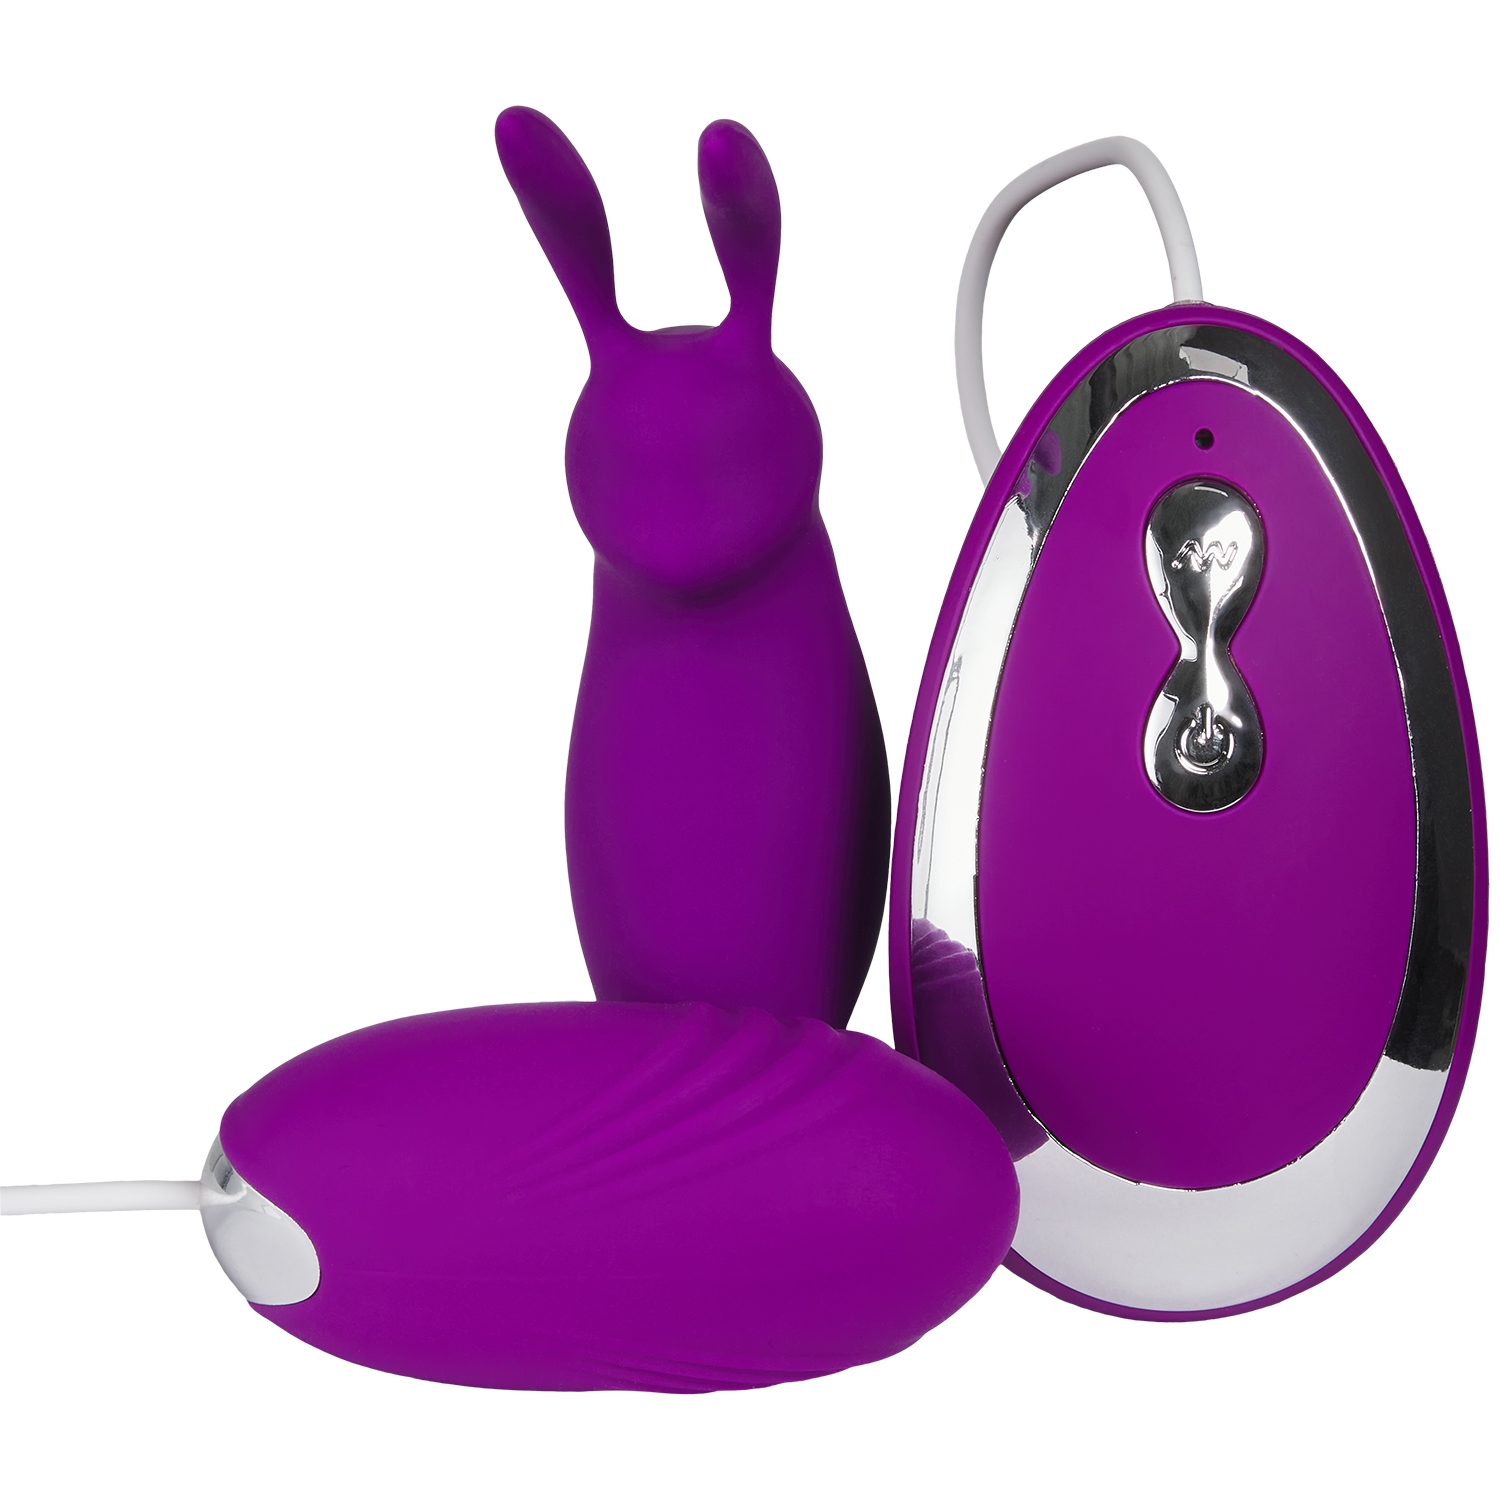 6: baseks Bunny Tickler og Vibrator Æg med Fjernbetjening   - Purple